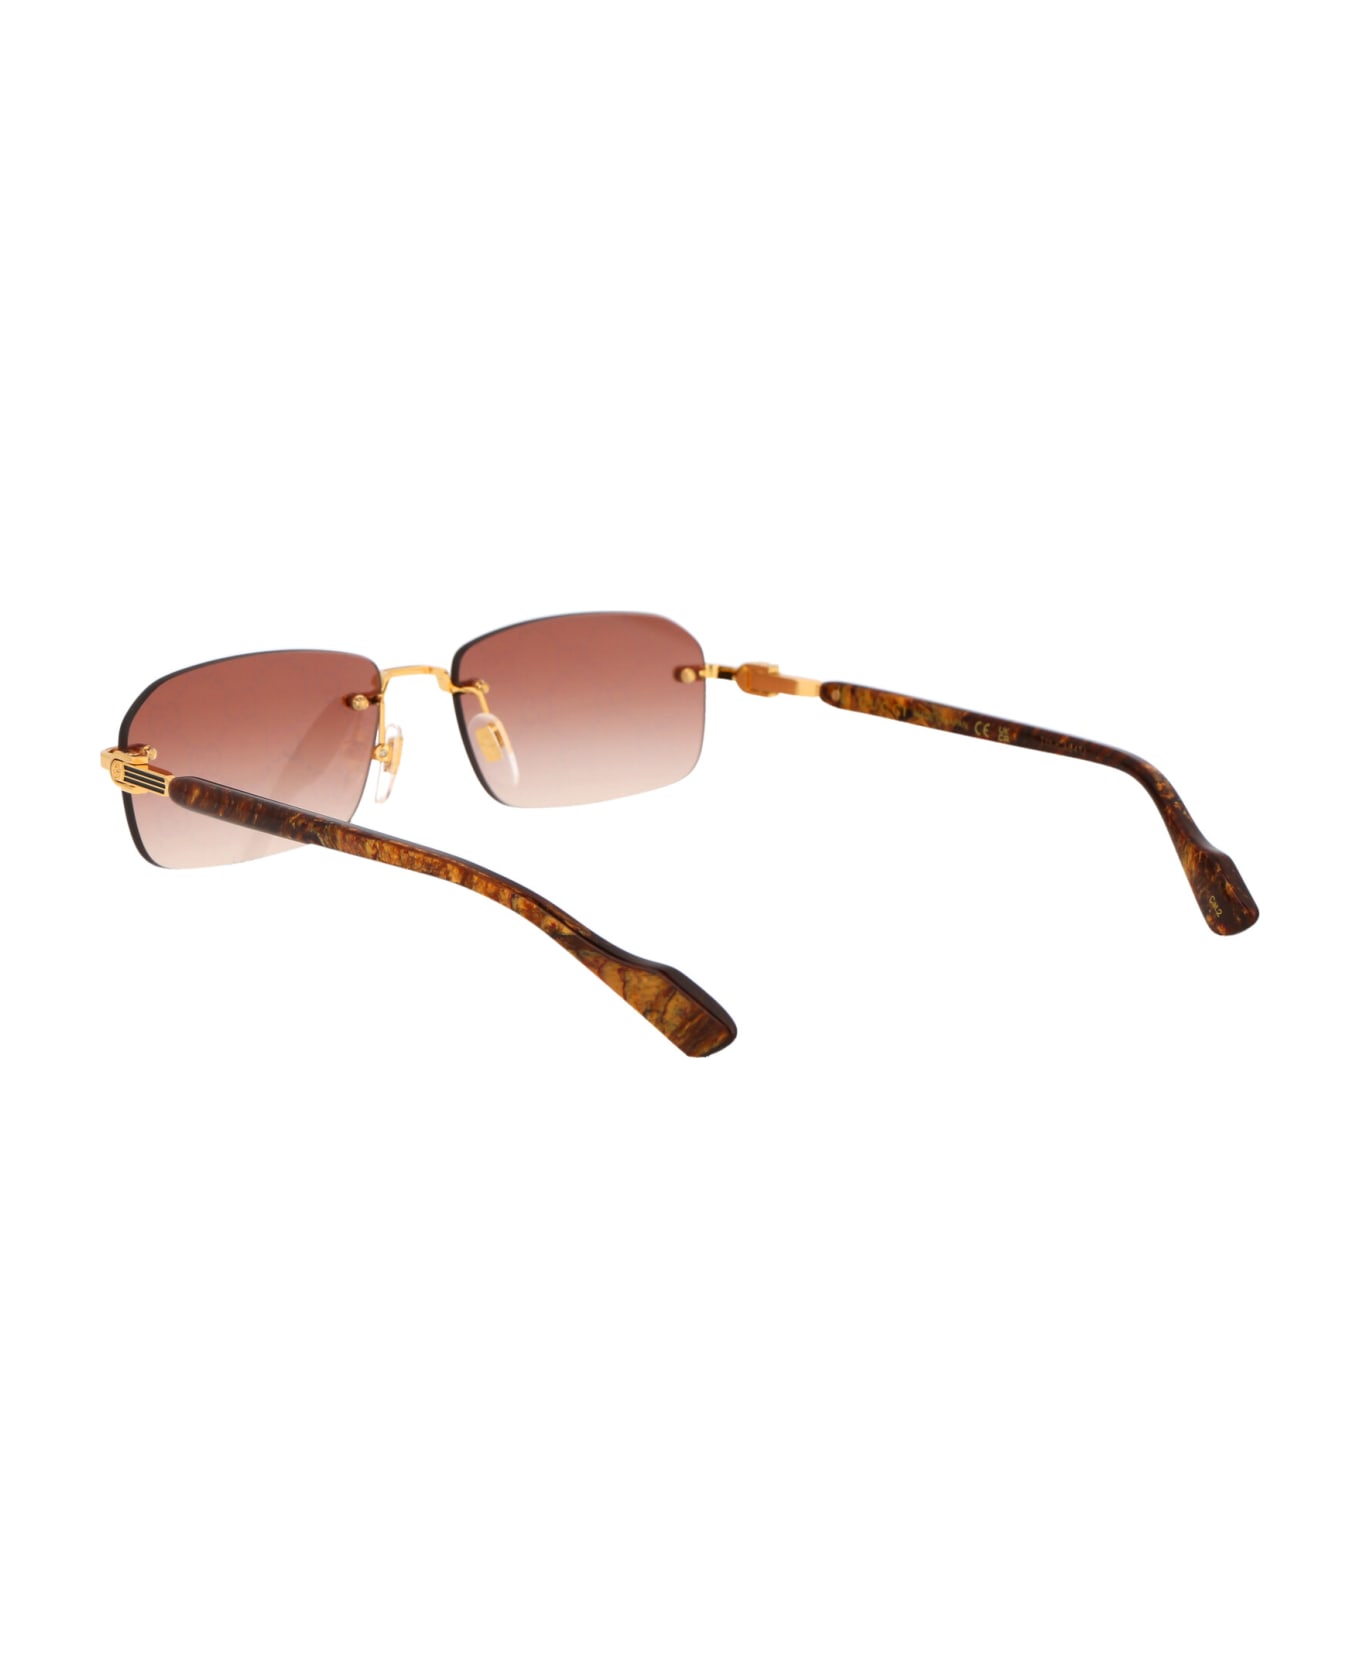 Gucci Eyewear Gg1221s Sunglasses - 004 GOLD YELLOW RED